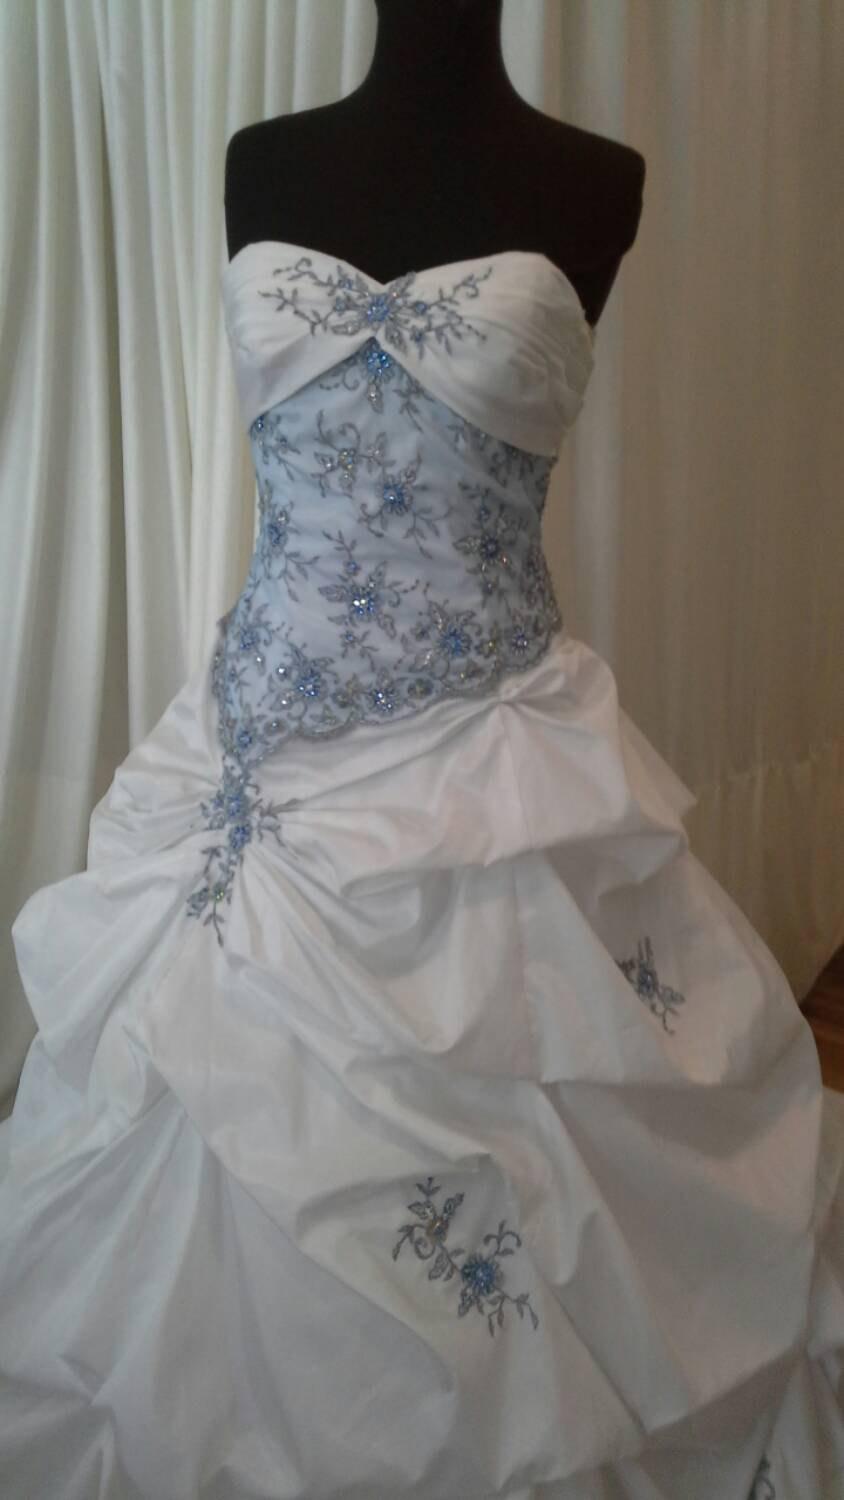 Mariage - White and blue "fairytale" ballgown/wedding dress